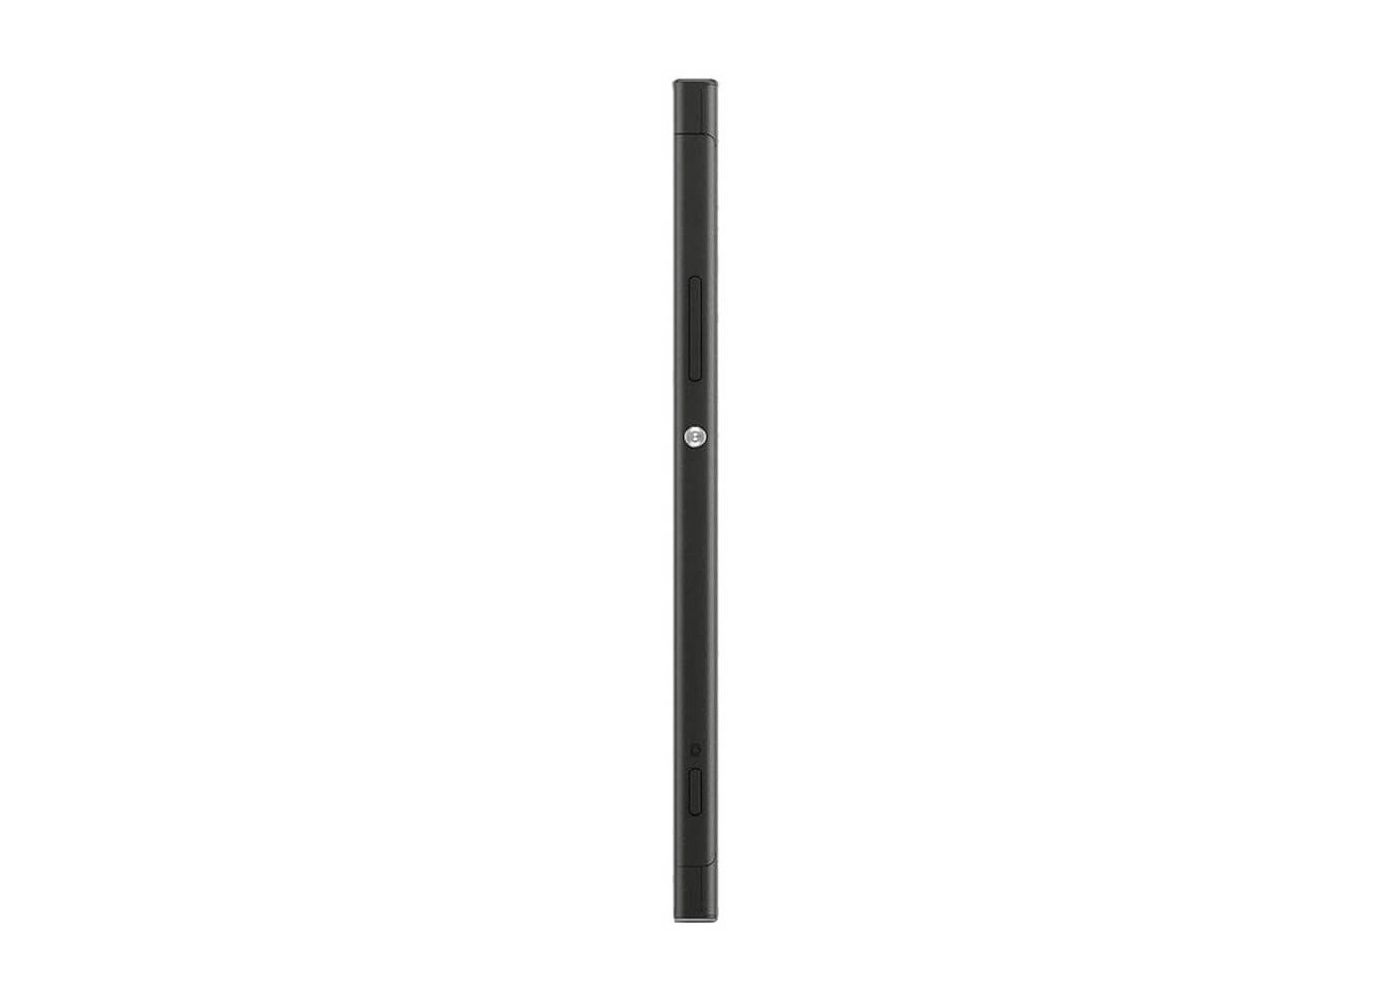 картинка Смартфон Sony Xperia XA1 Dual Black от магазина ДомКомфорт